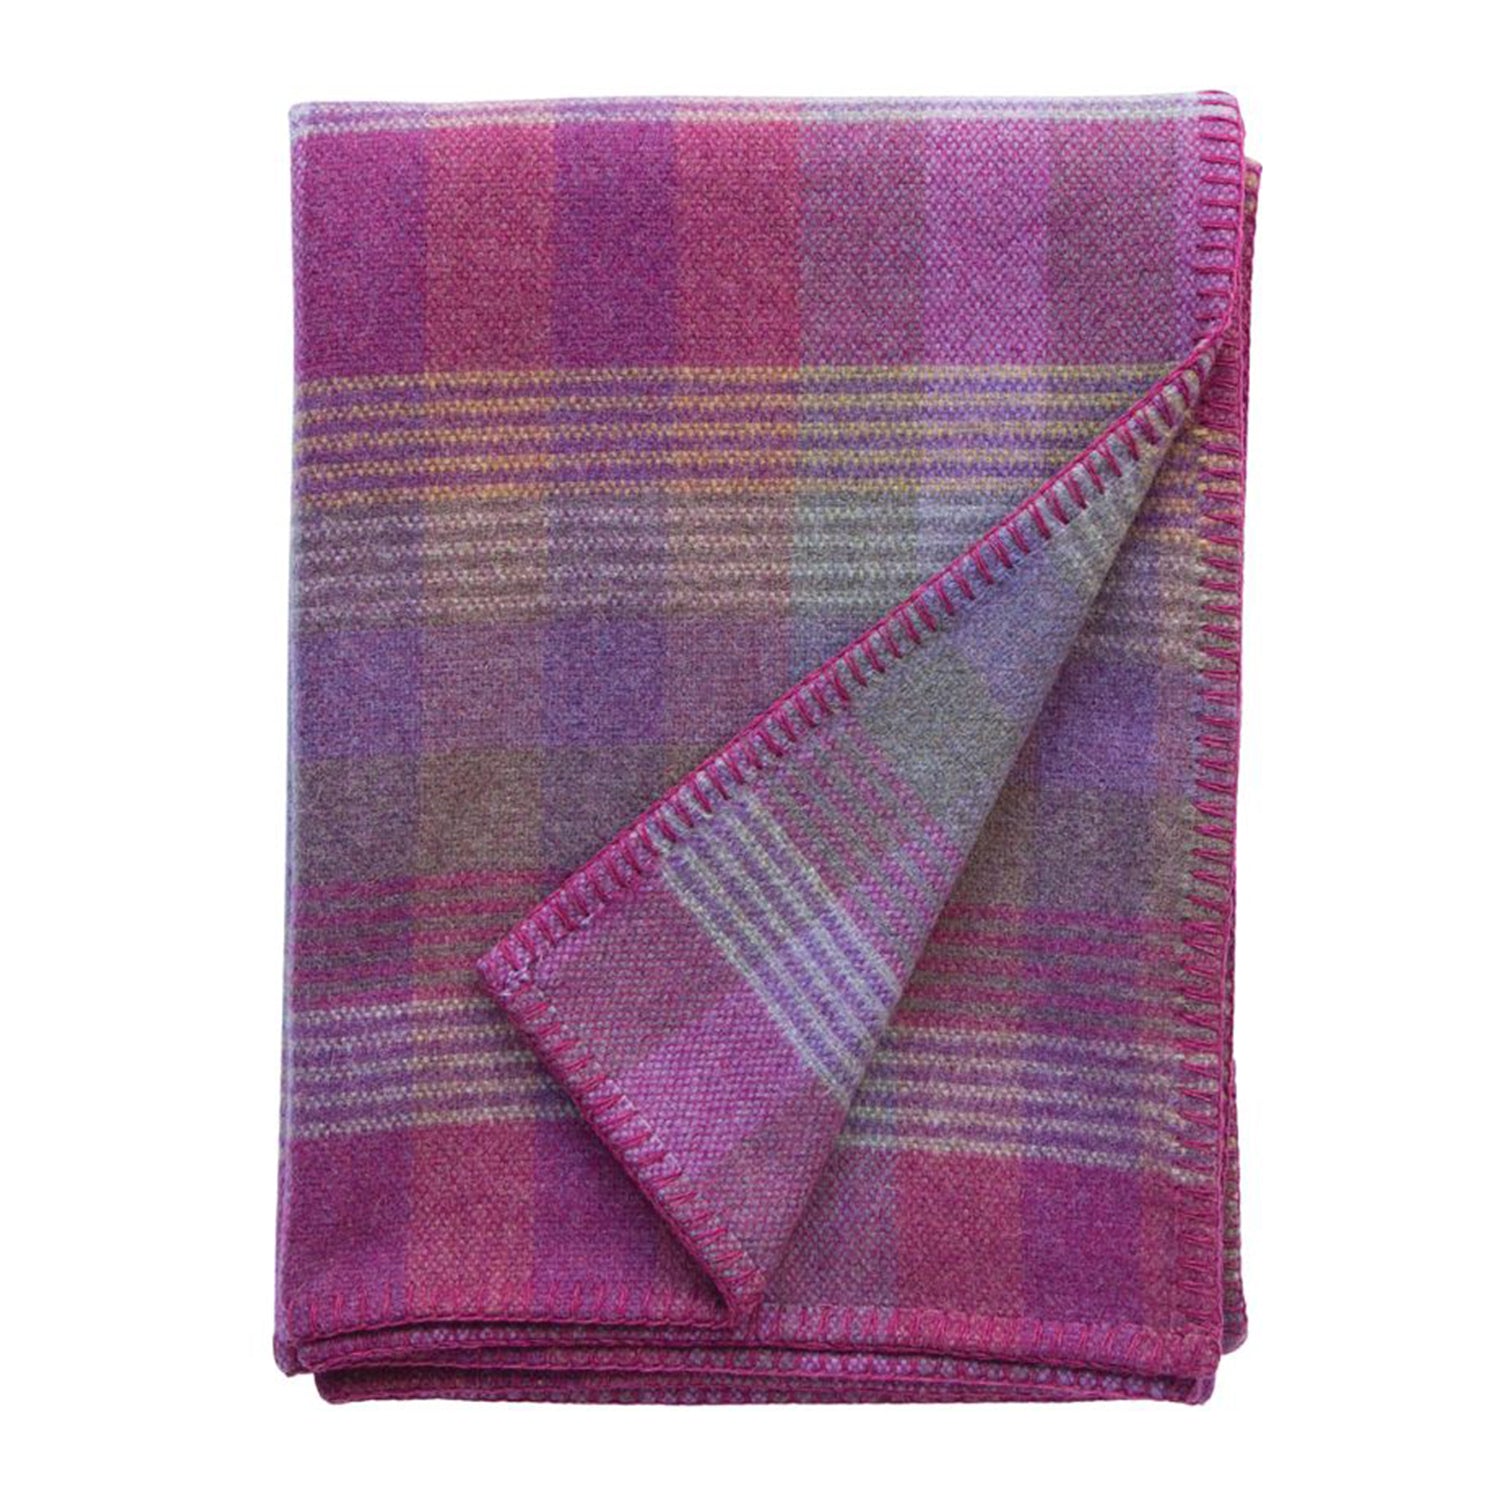 Rhostir (Heathland) Welsh Blanket - Abaca Mattresses